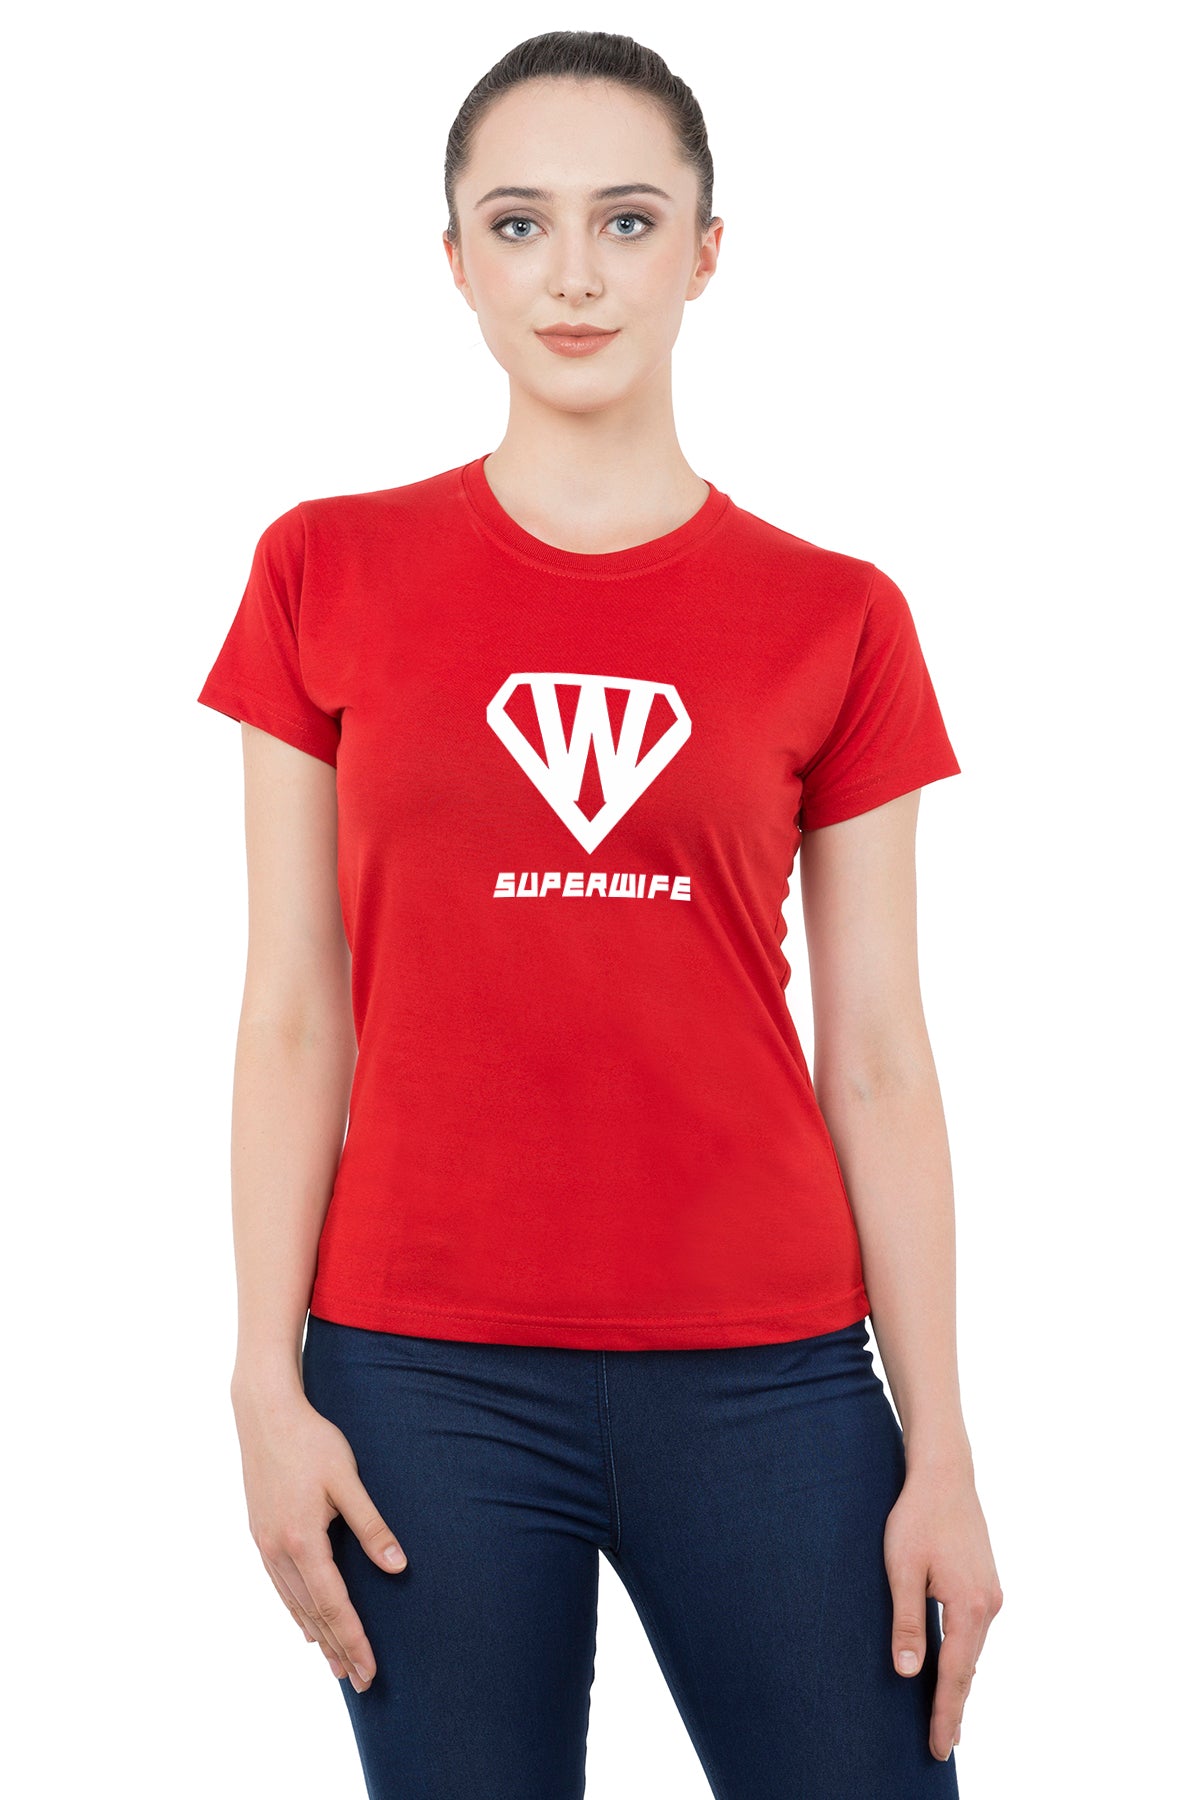 Super Husband & Wife matching Couple T shirts- Red